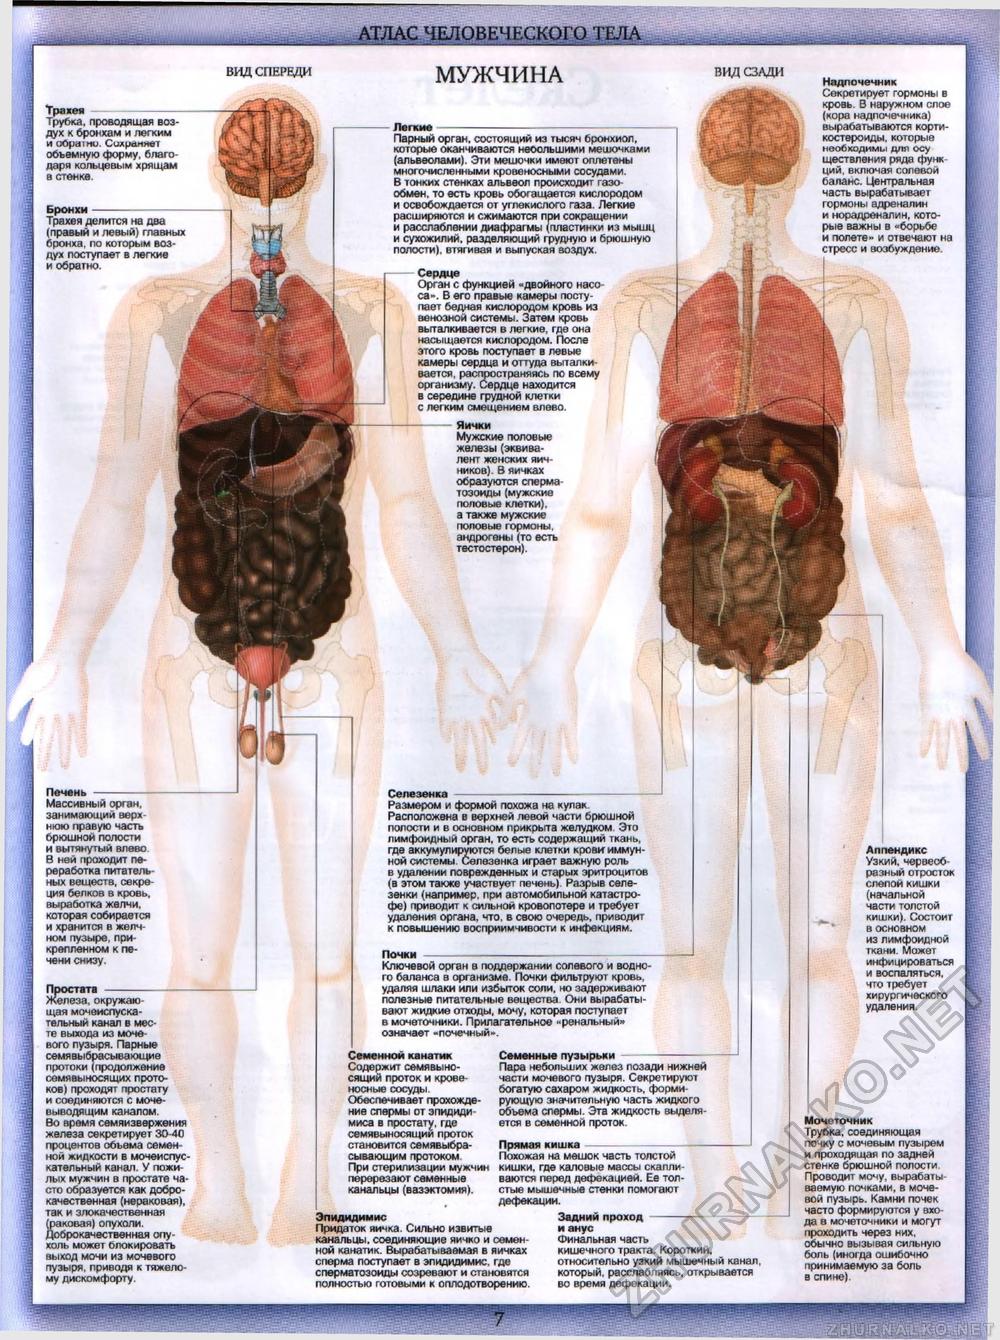 Тело человека №00 - Атлас человеческого тела, страница 7